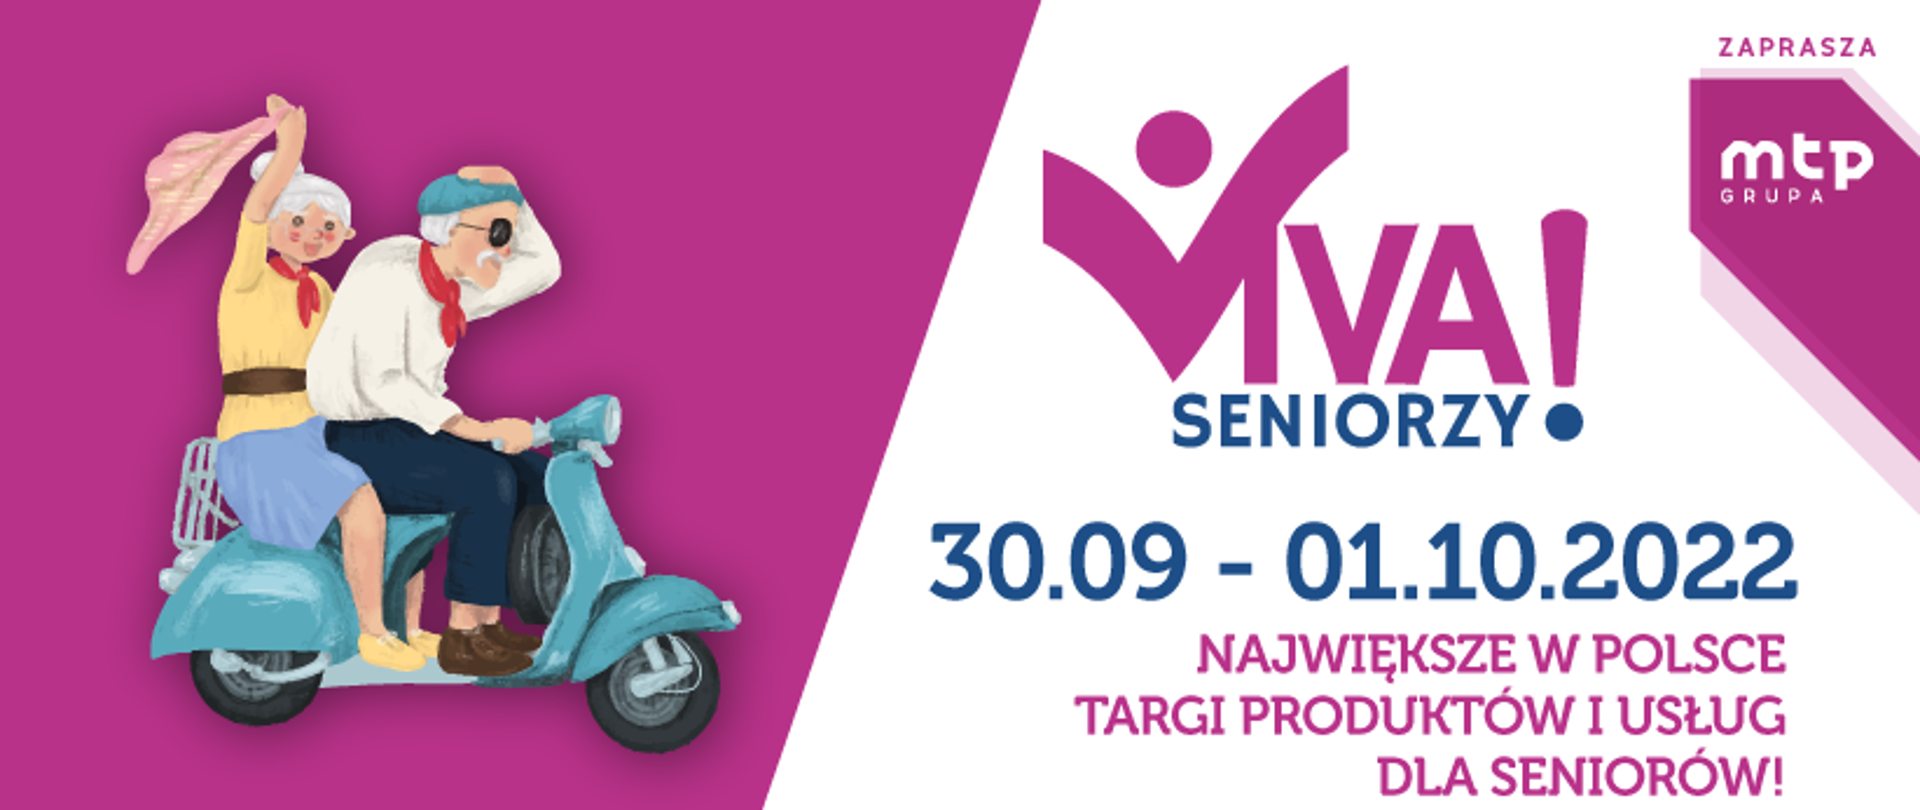 grafika promująca targi viva seniorzy